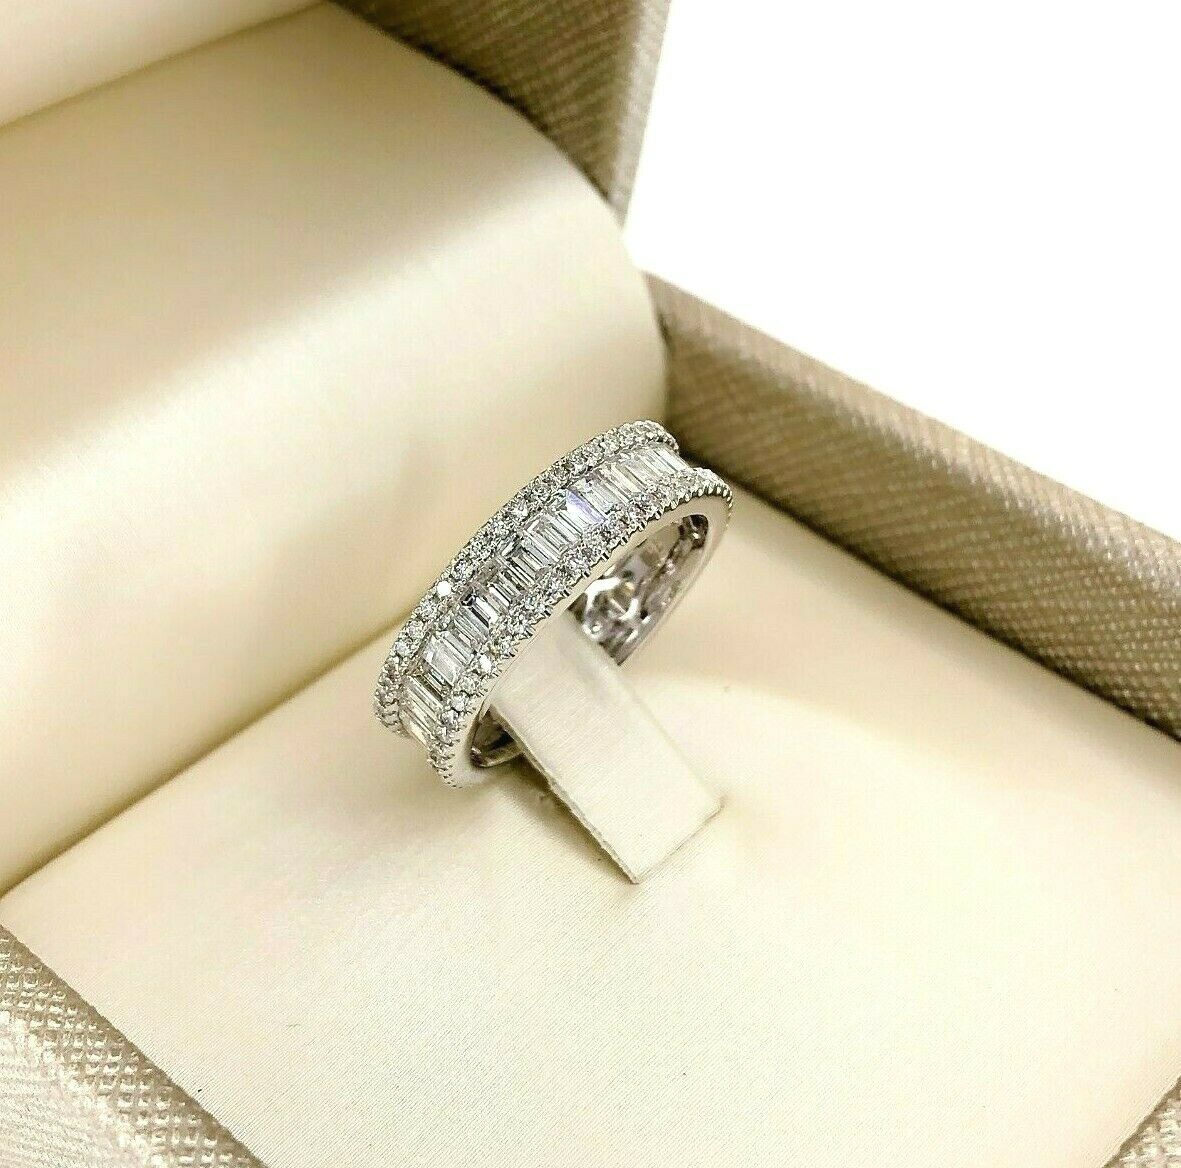 2.38 Carats Round & Baguette Diamond Anniversary Eternity Ring Wedding Band